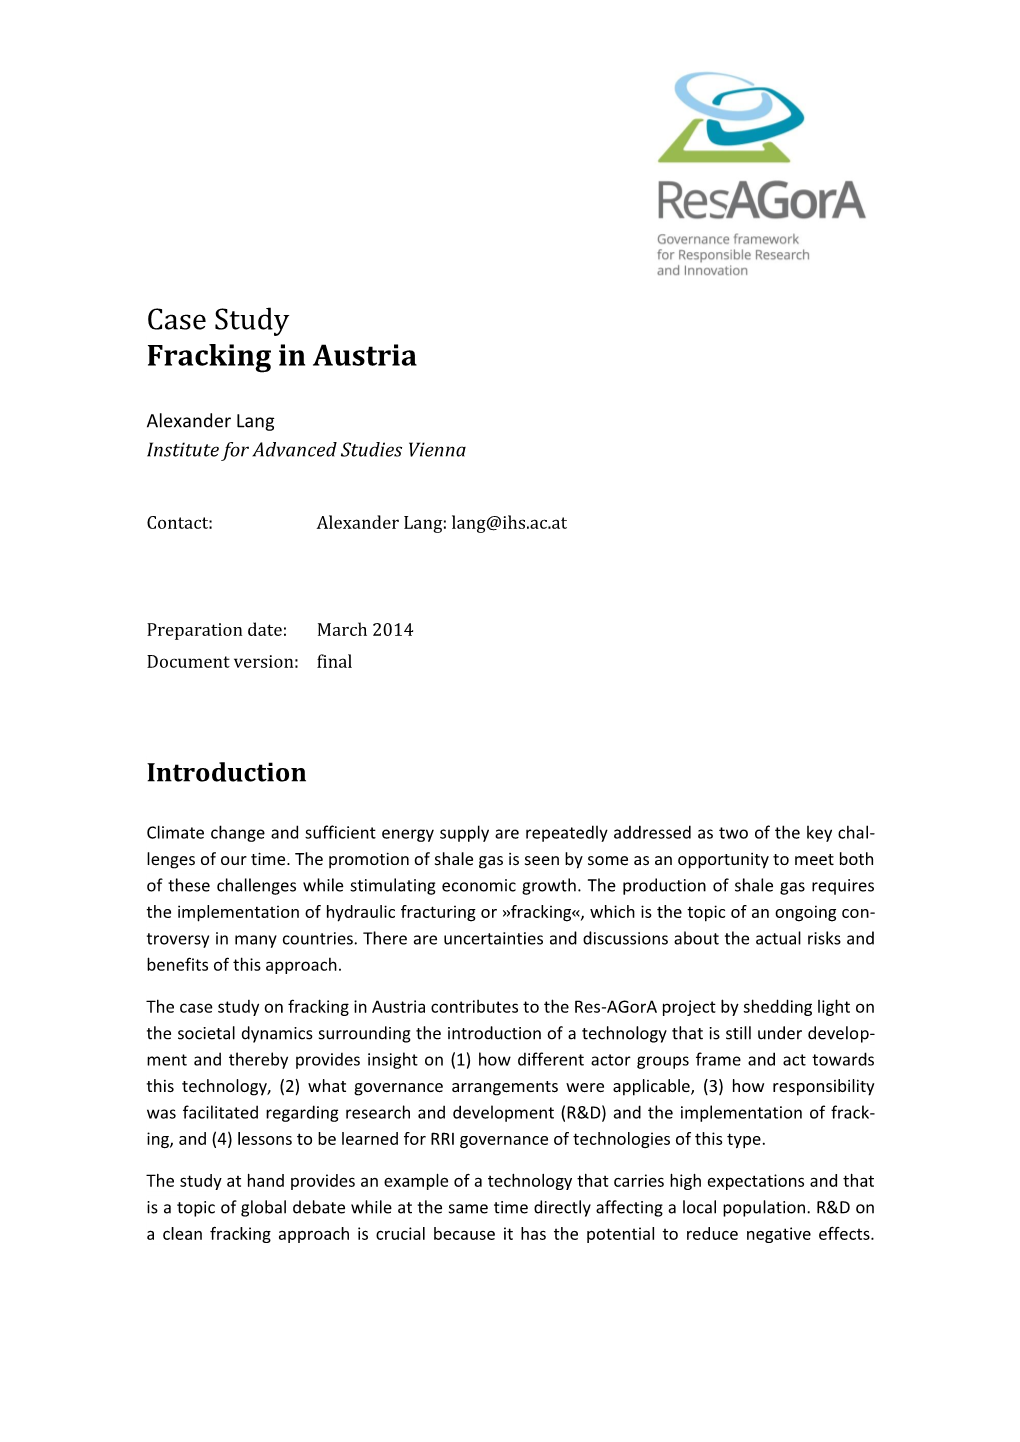 Case Study Fracking in Austria